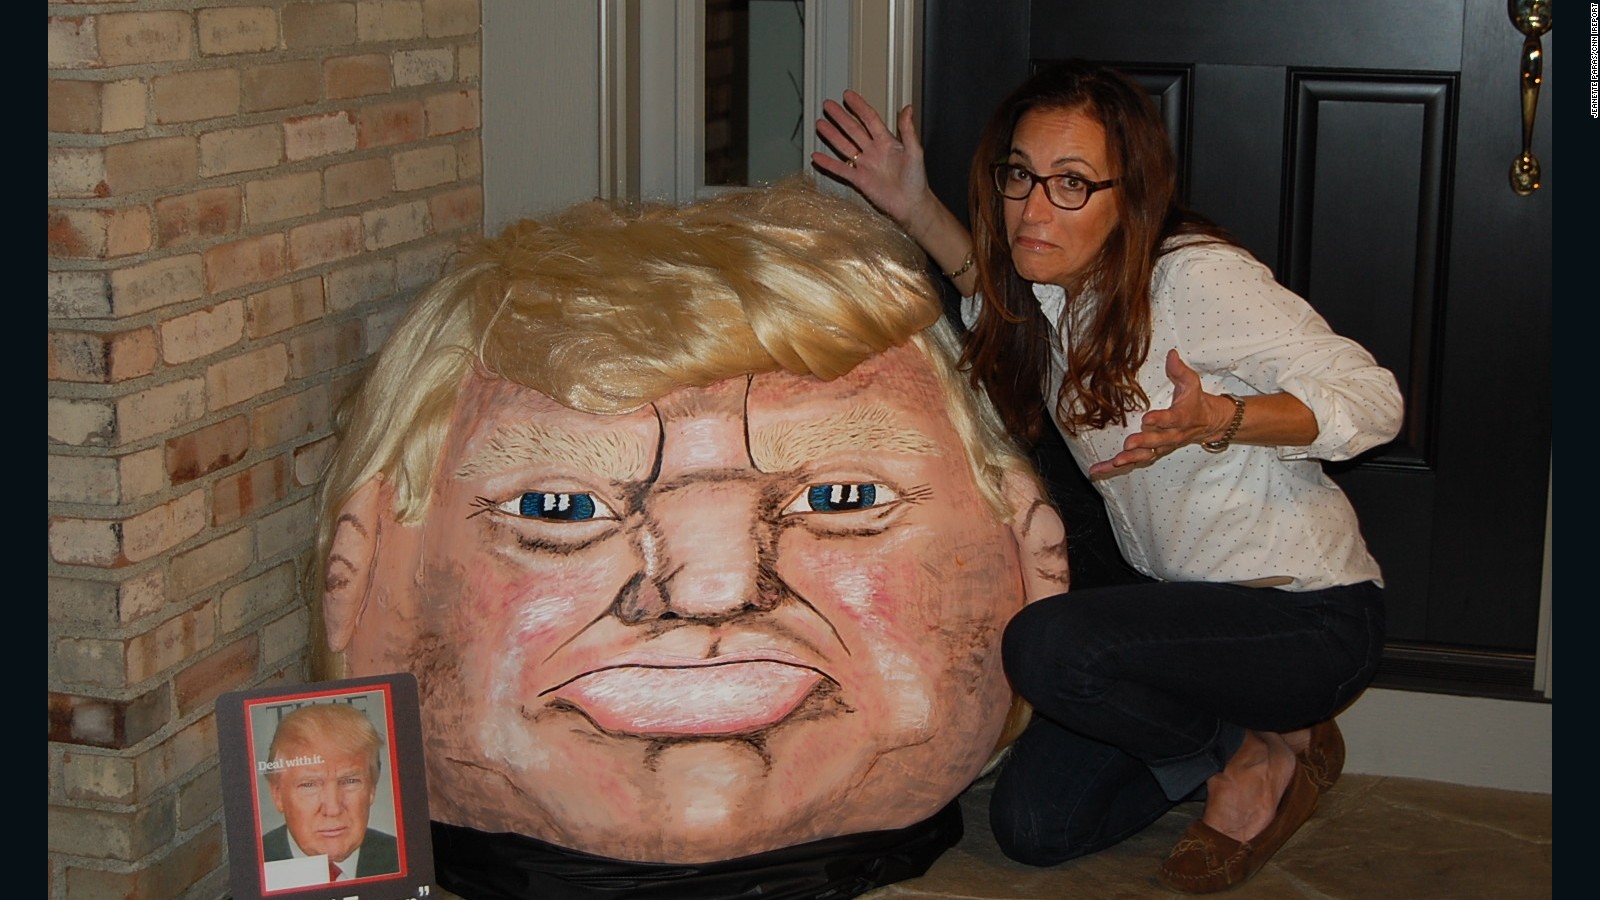 Suriyu Every Year She Turns Giant Pumpkins Into Celebs This Year She Chose Rudy Giuliani And 